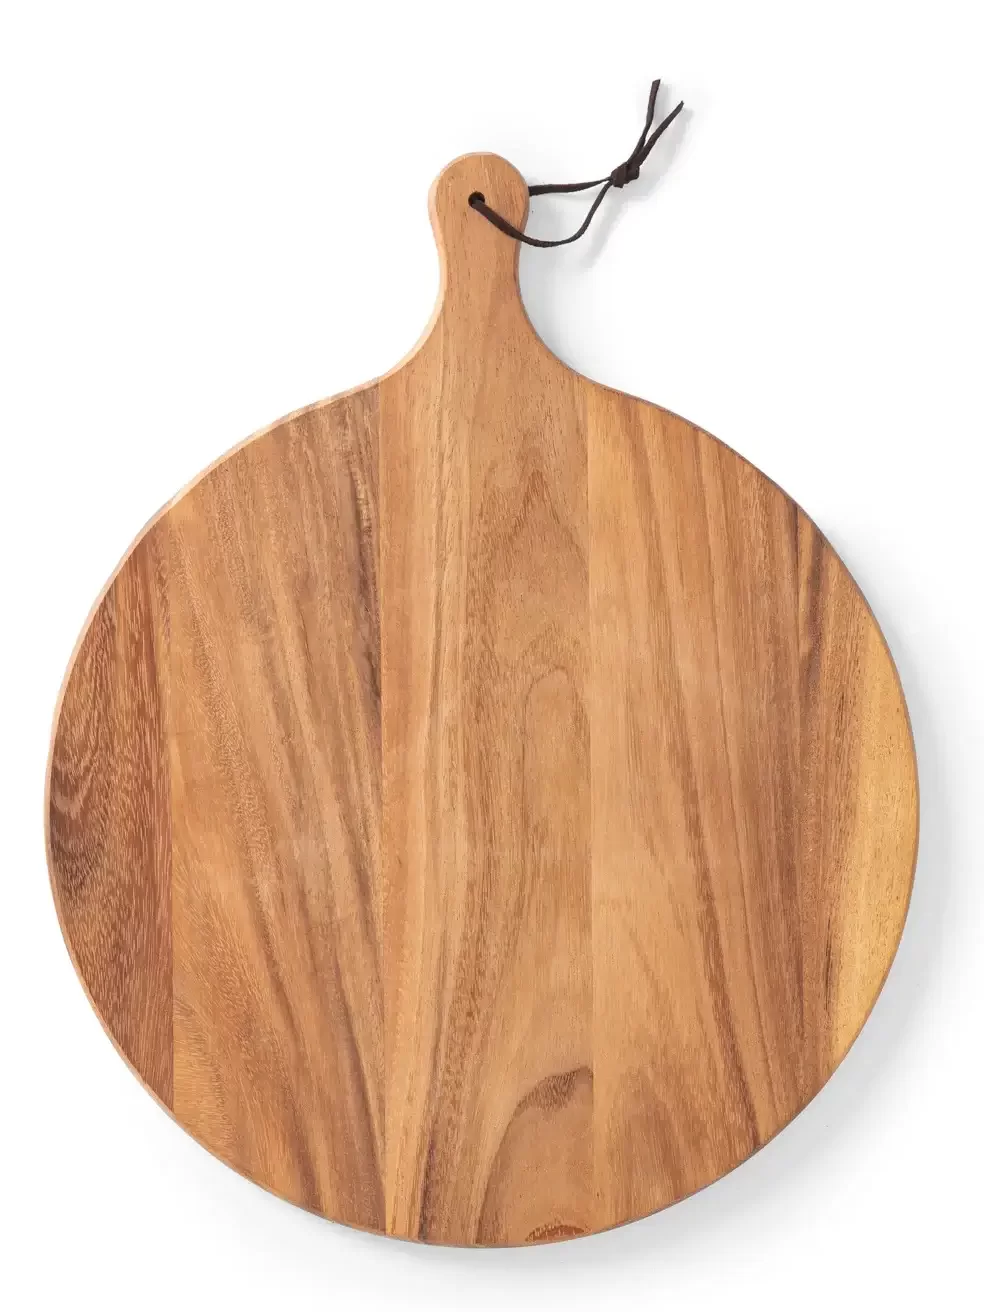 A circular wooden cutting board